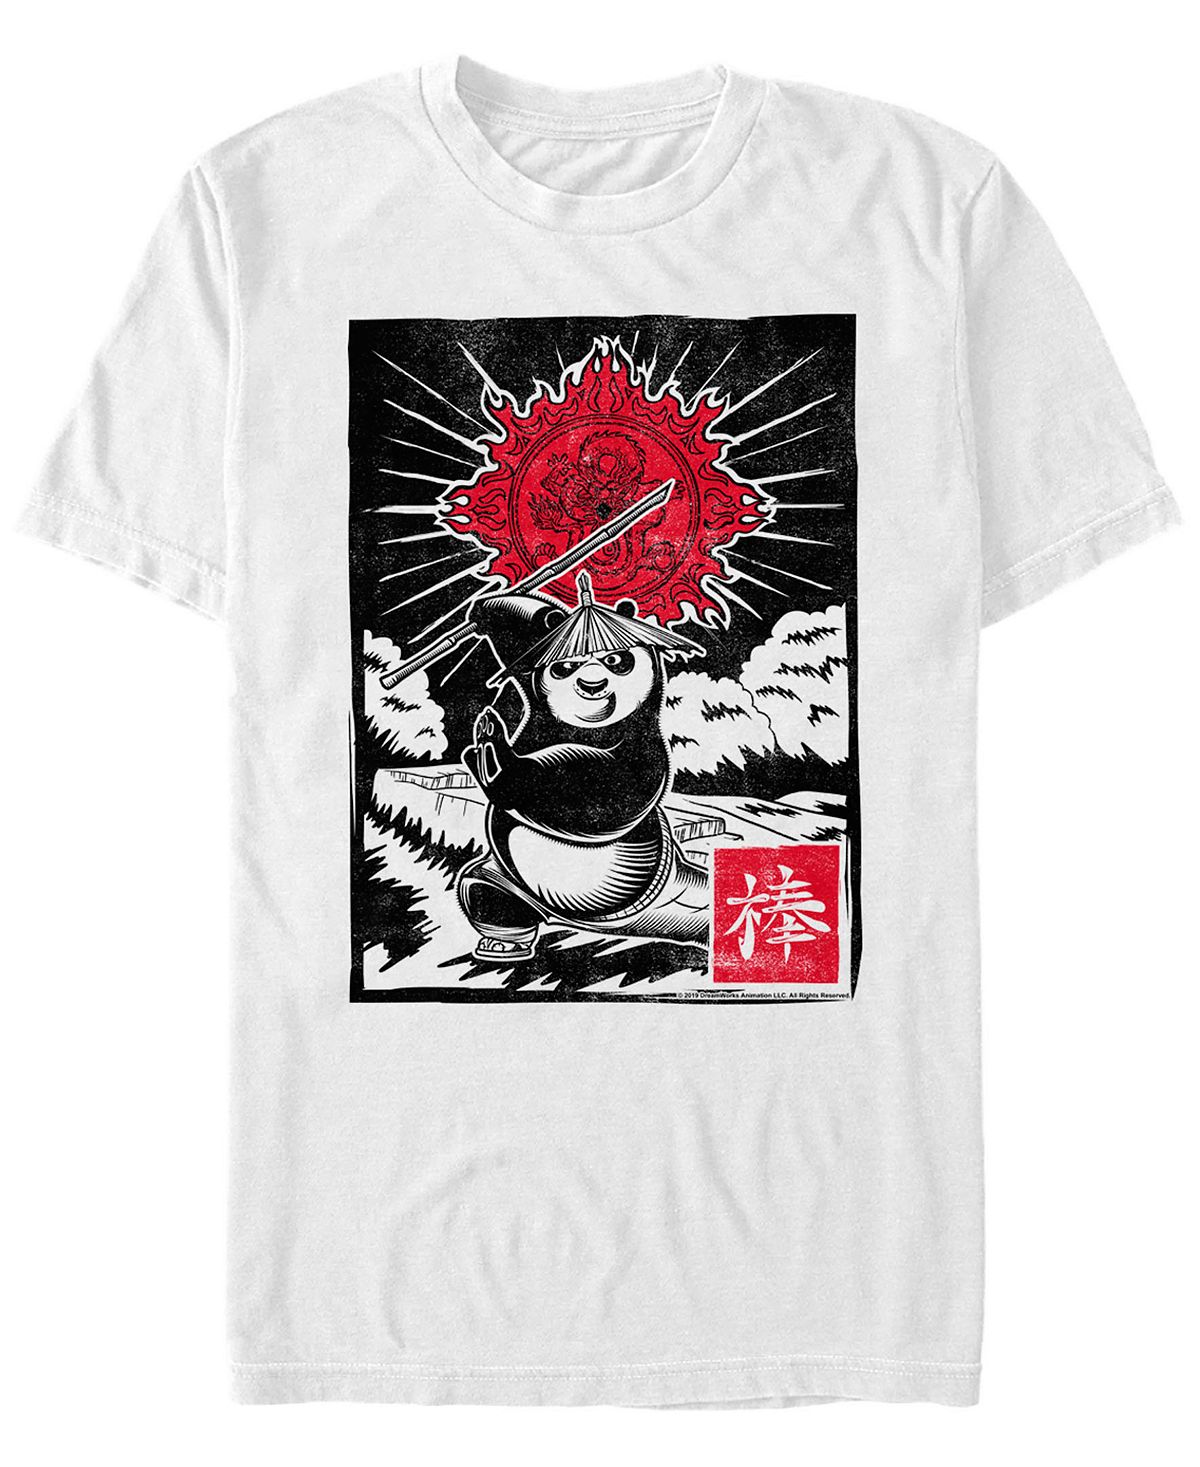 Кунг-фу панда мужская футболка с коротким рукавом с плакатом po warrior Fifth Sun, белый printio кепка шаолинь кунг фу